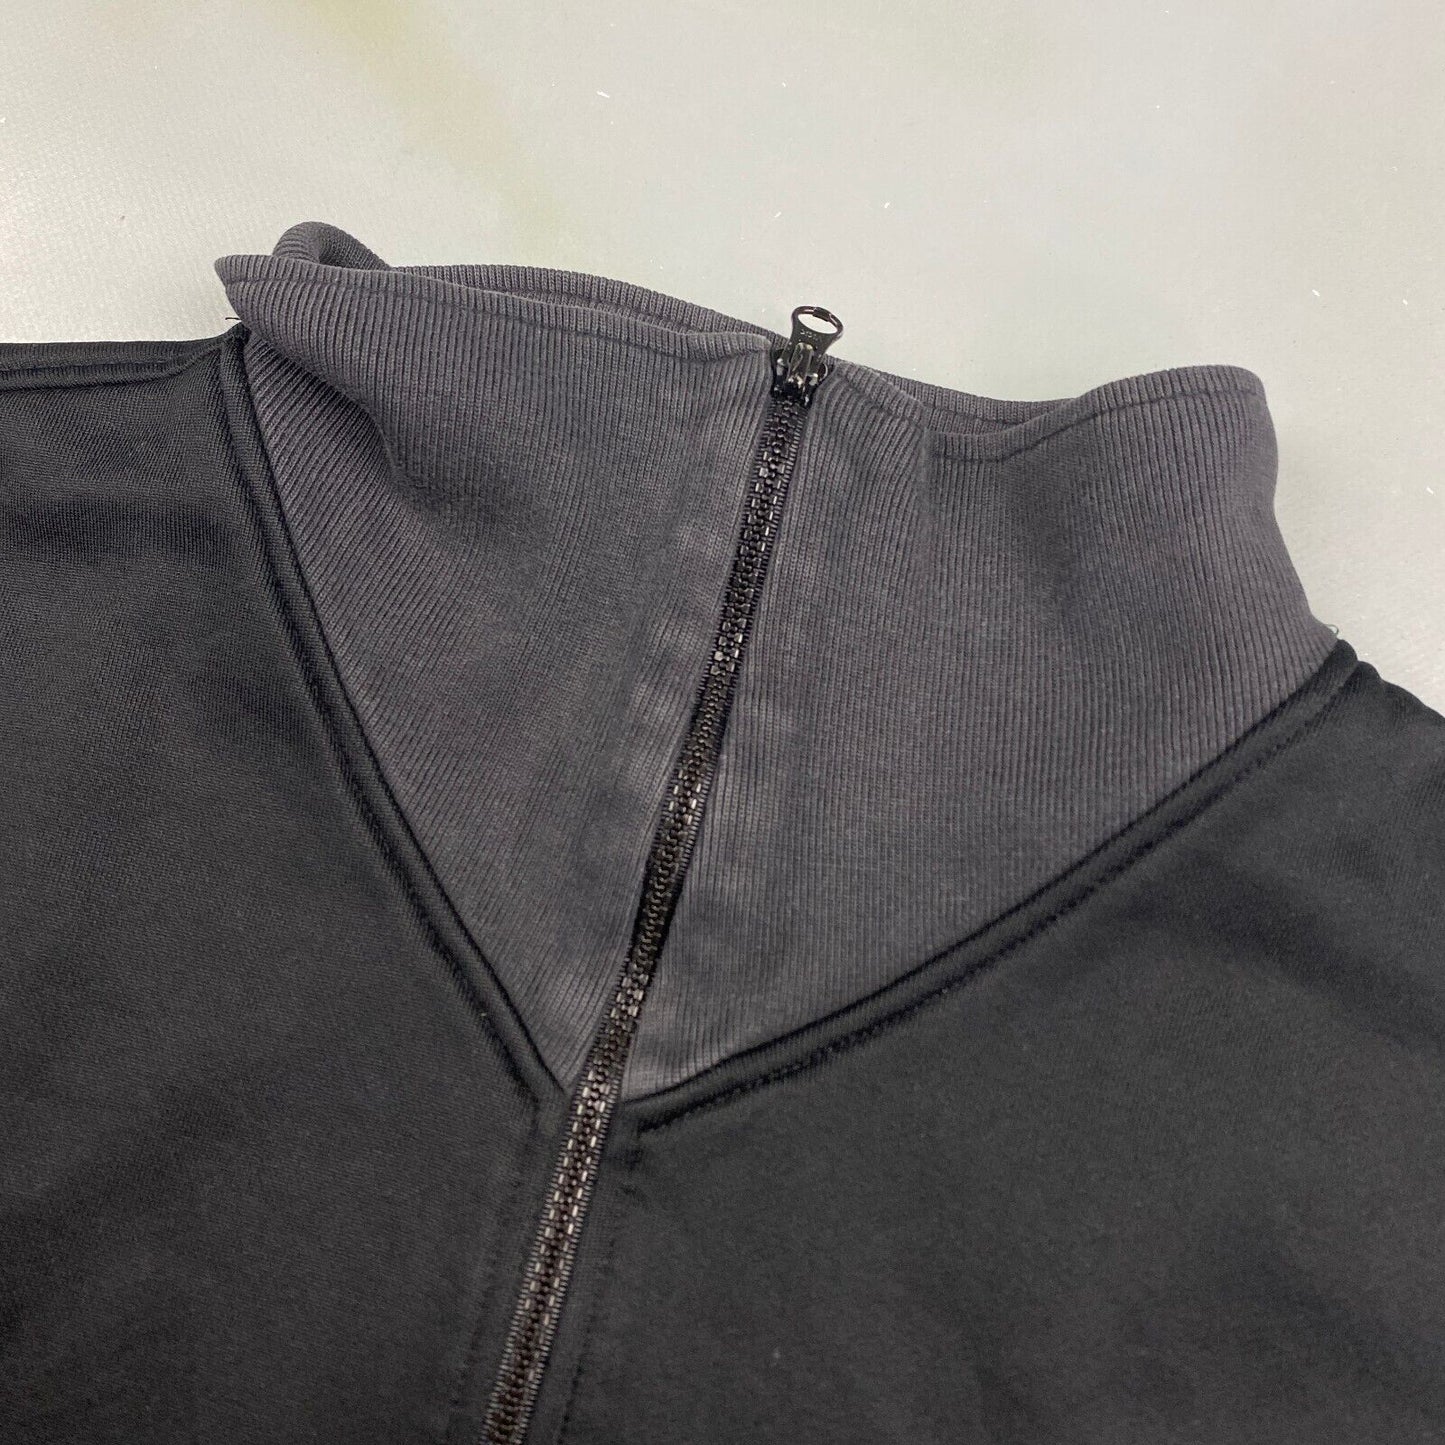 VINTAGE Tommy Hilfiger Athletic Gear Full Zip Black Sweater sz Large Mens Adult